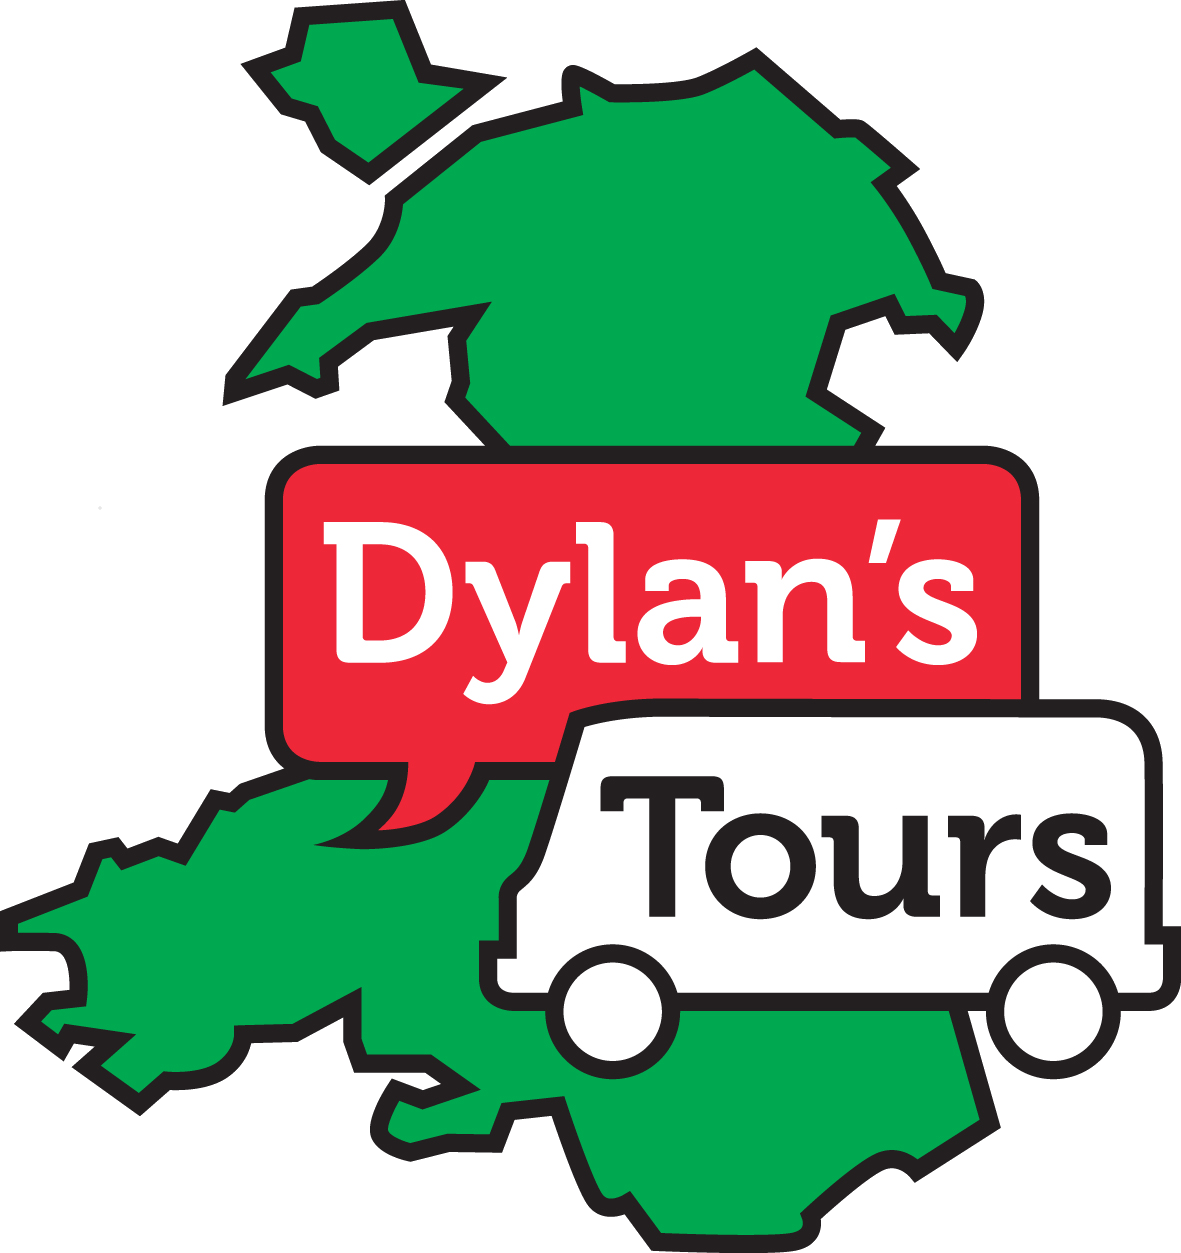 Dylans Tours logo